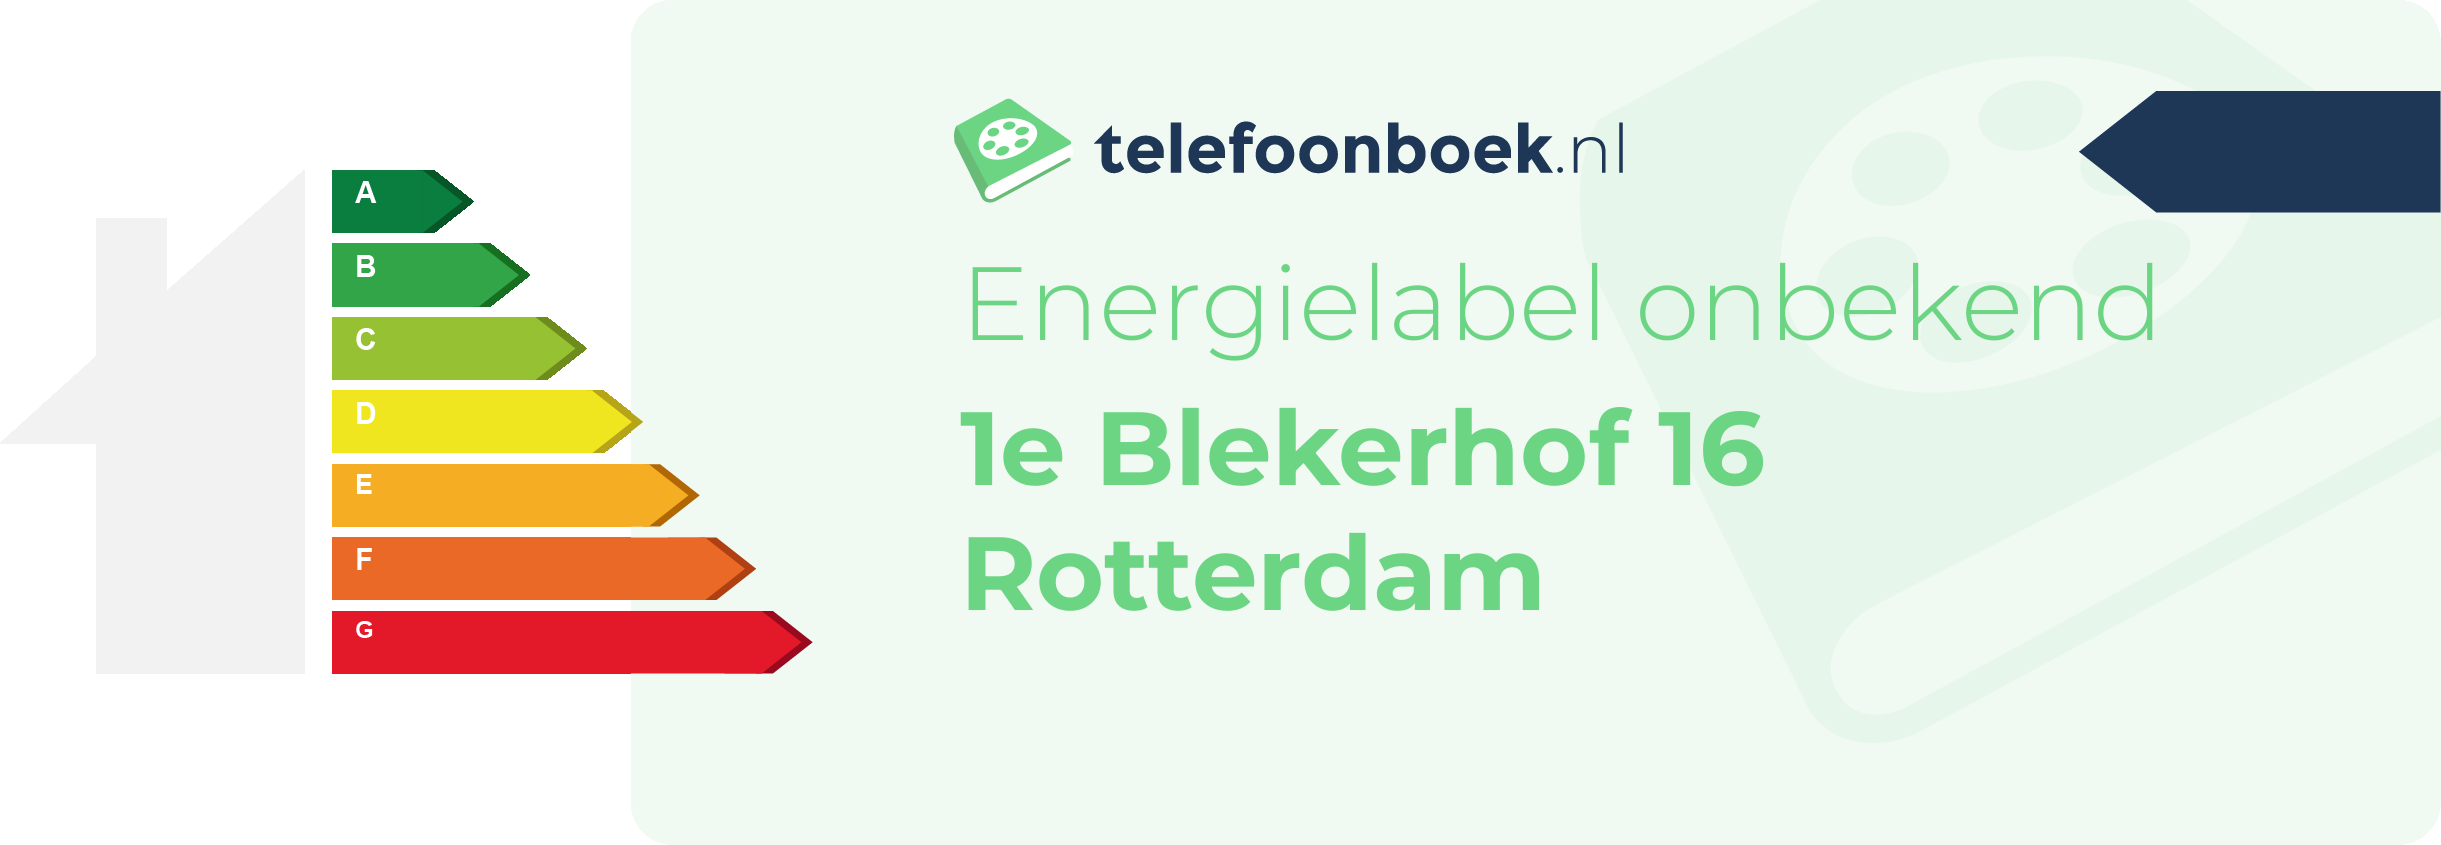 Energielabel 1e Blekerhof 16 Rotterdam